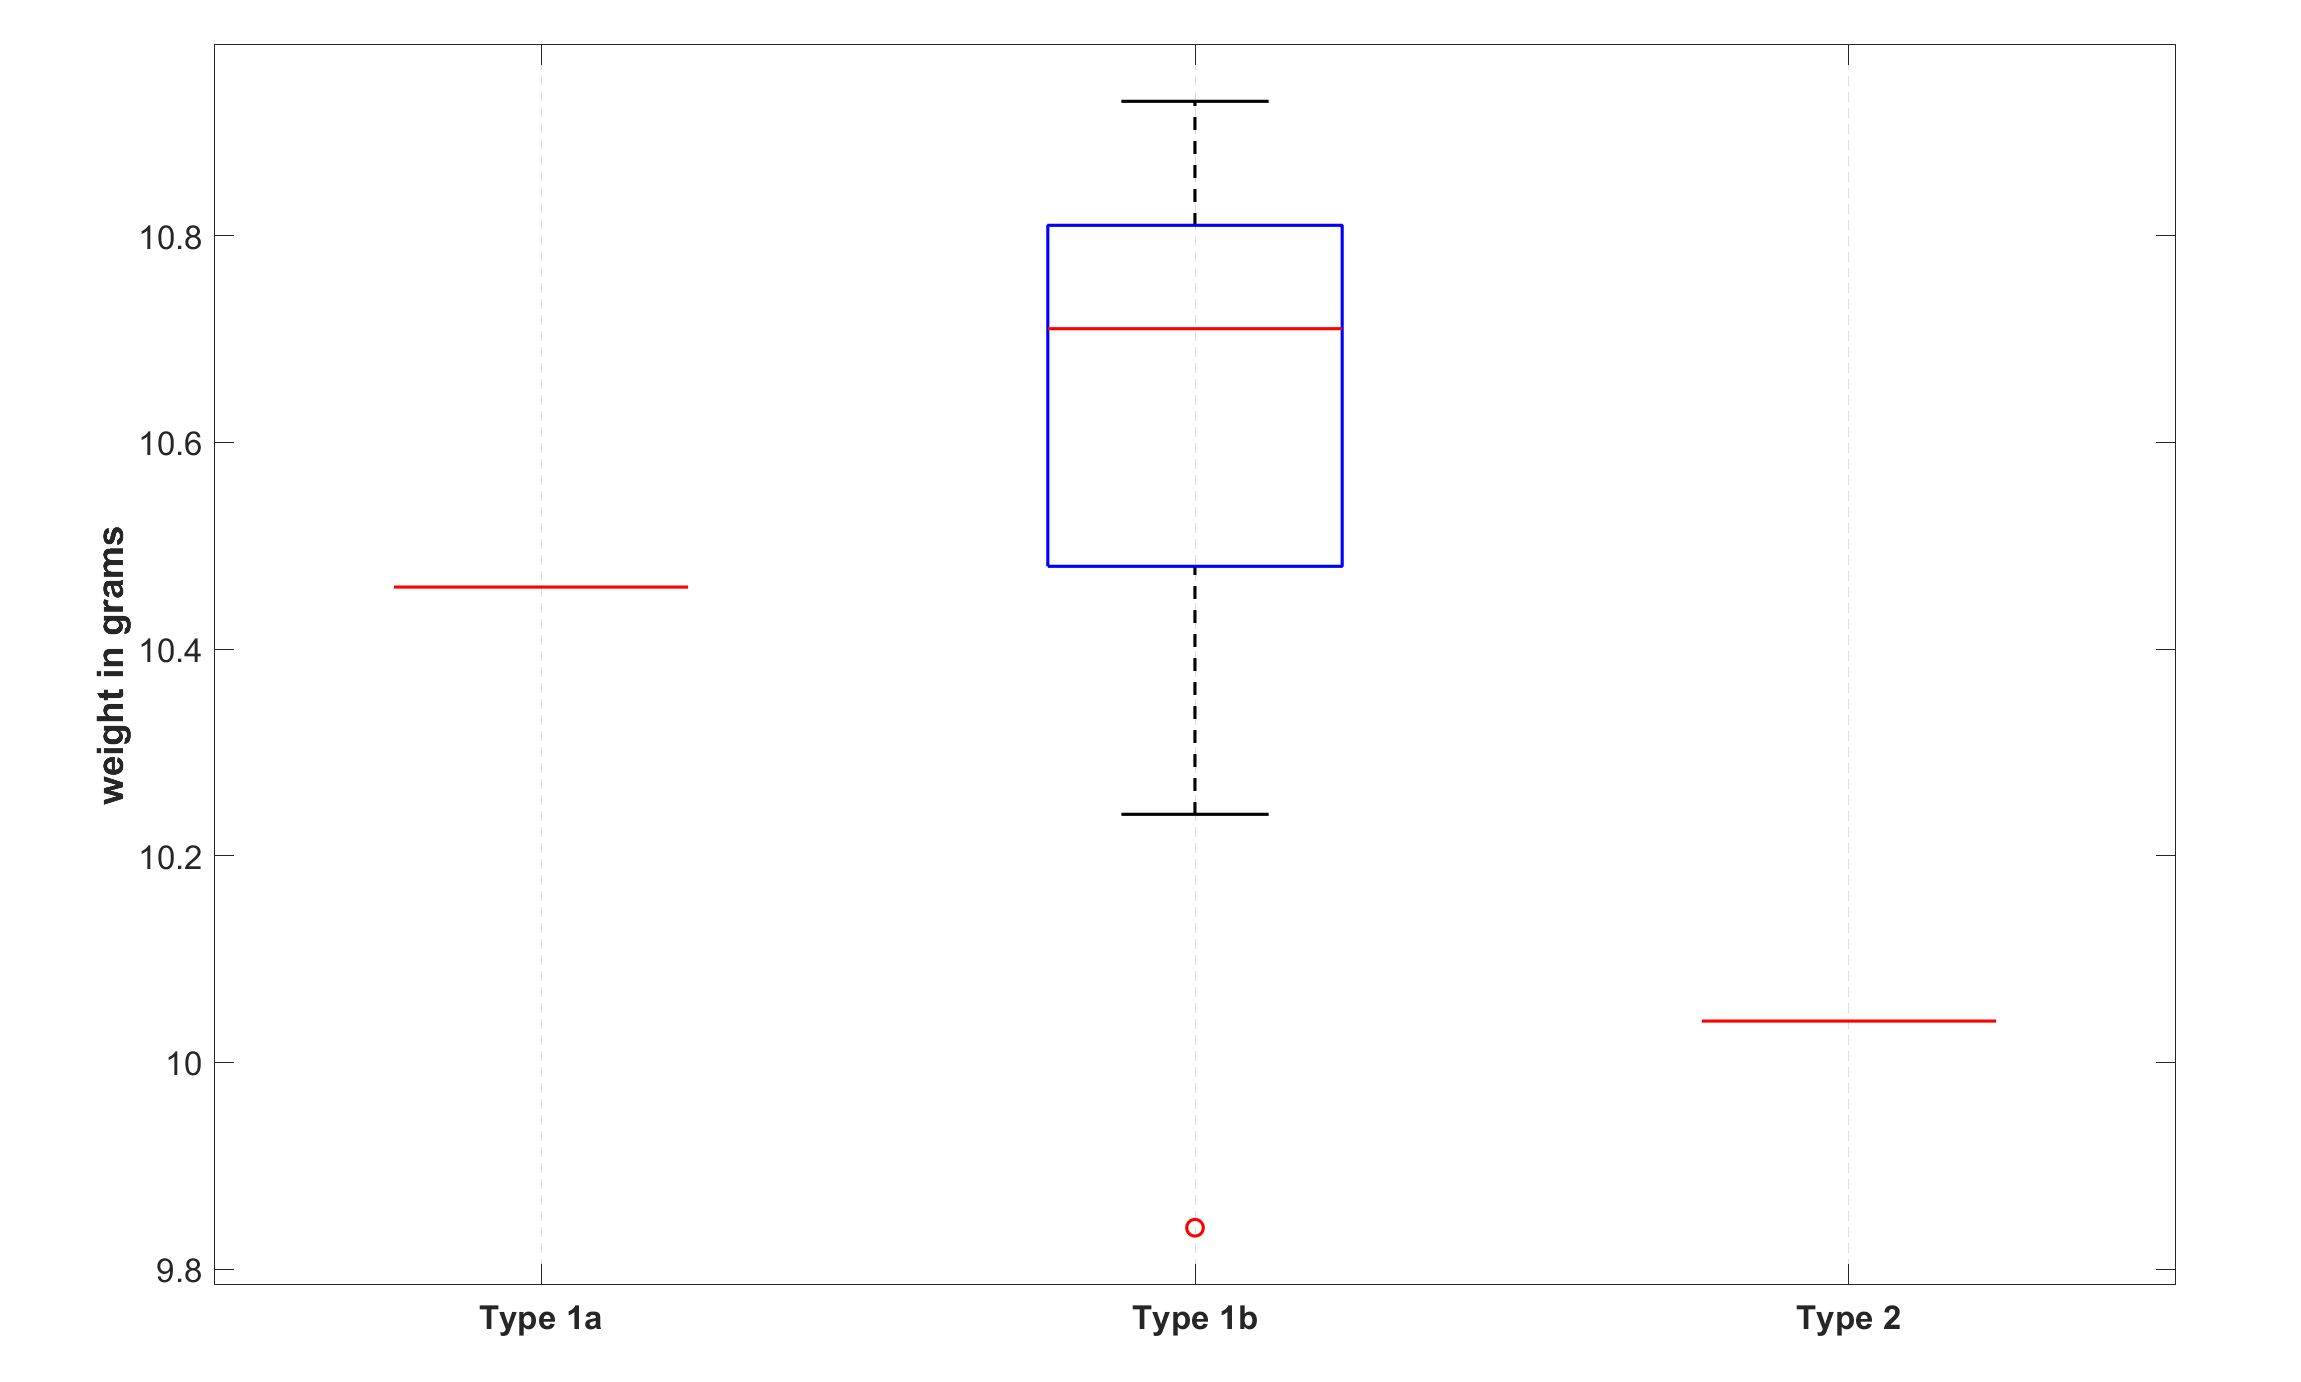 Figure 1: Box plots